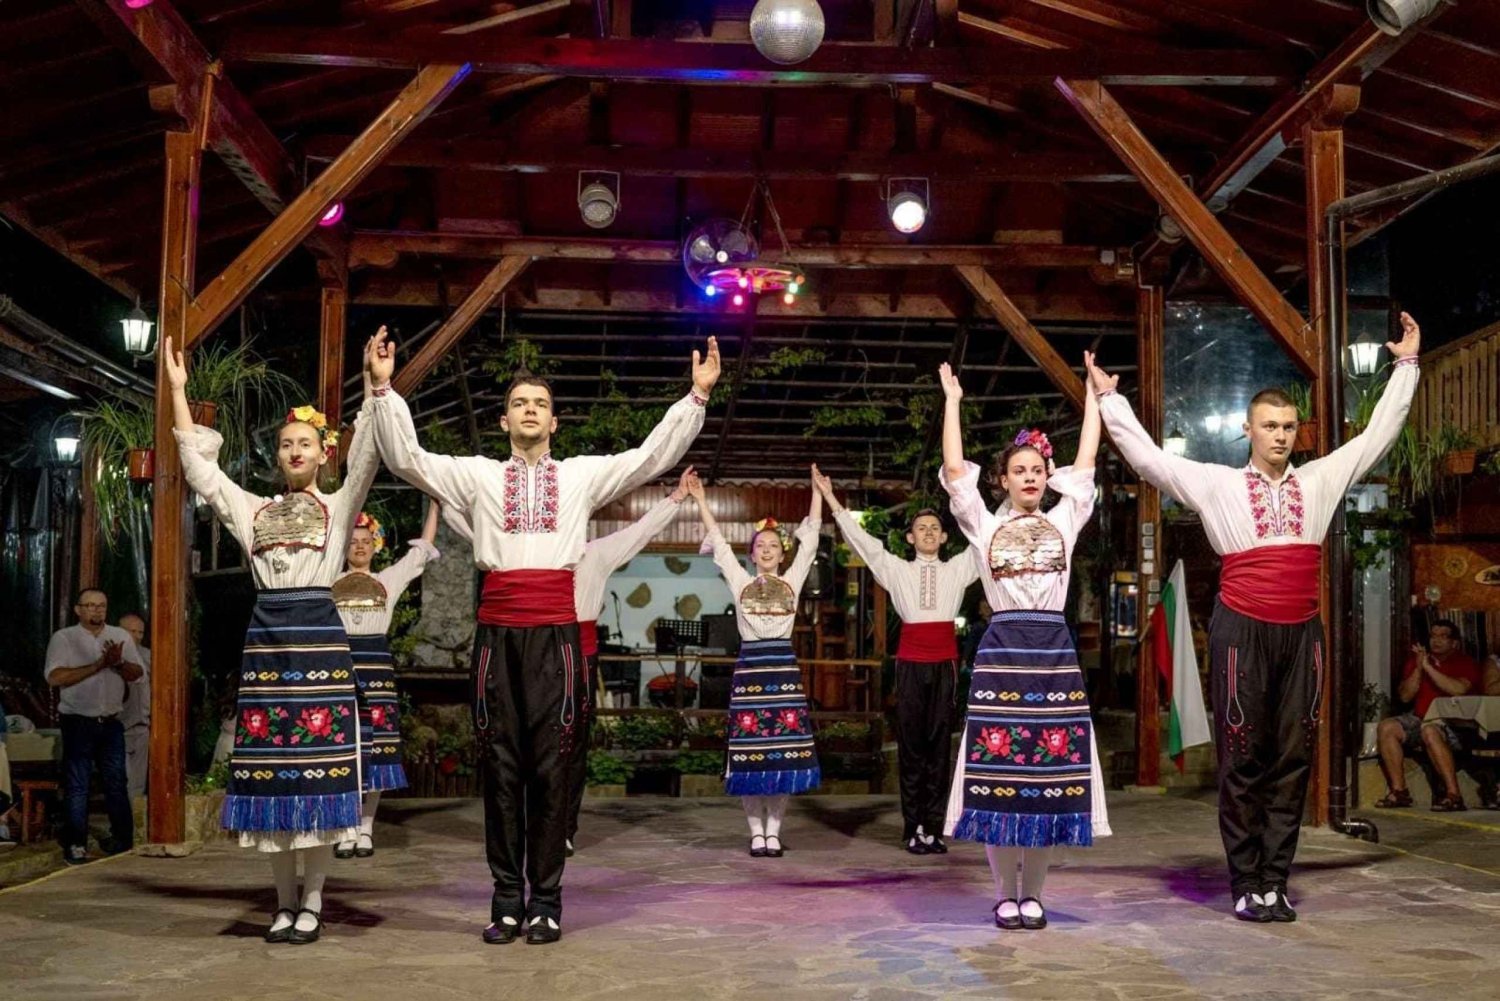 Bulgarian Evening: Traditional Restaurant & Folklore Program